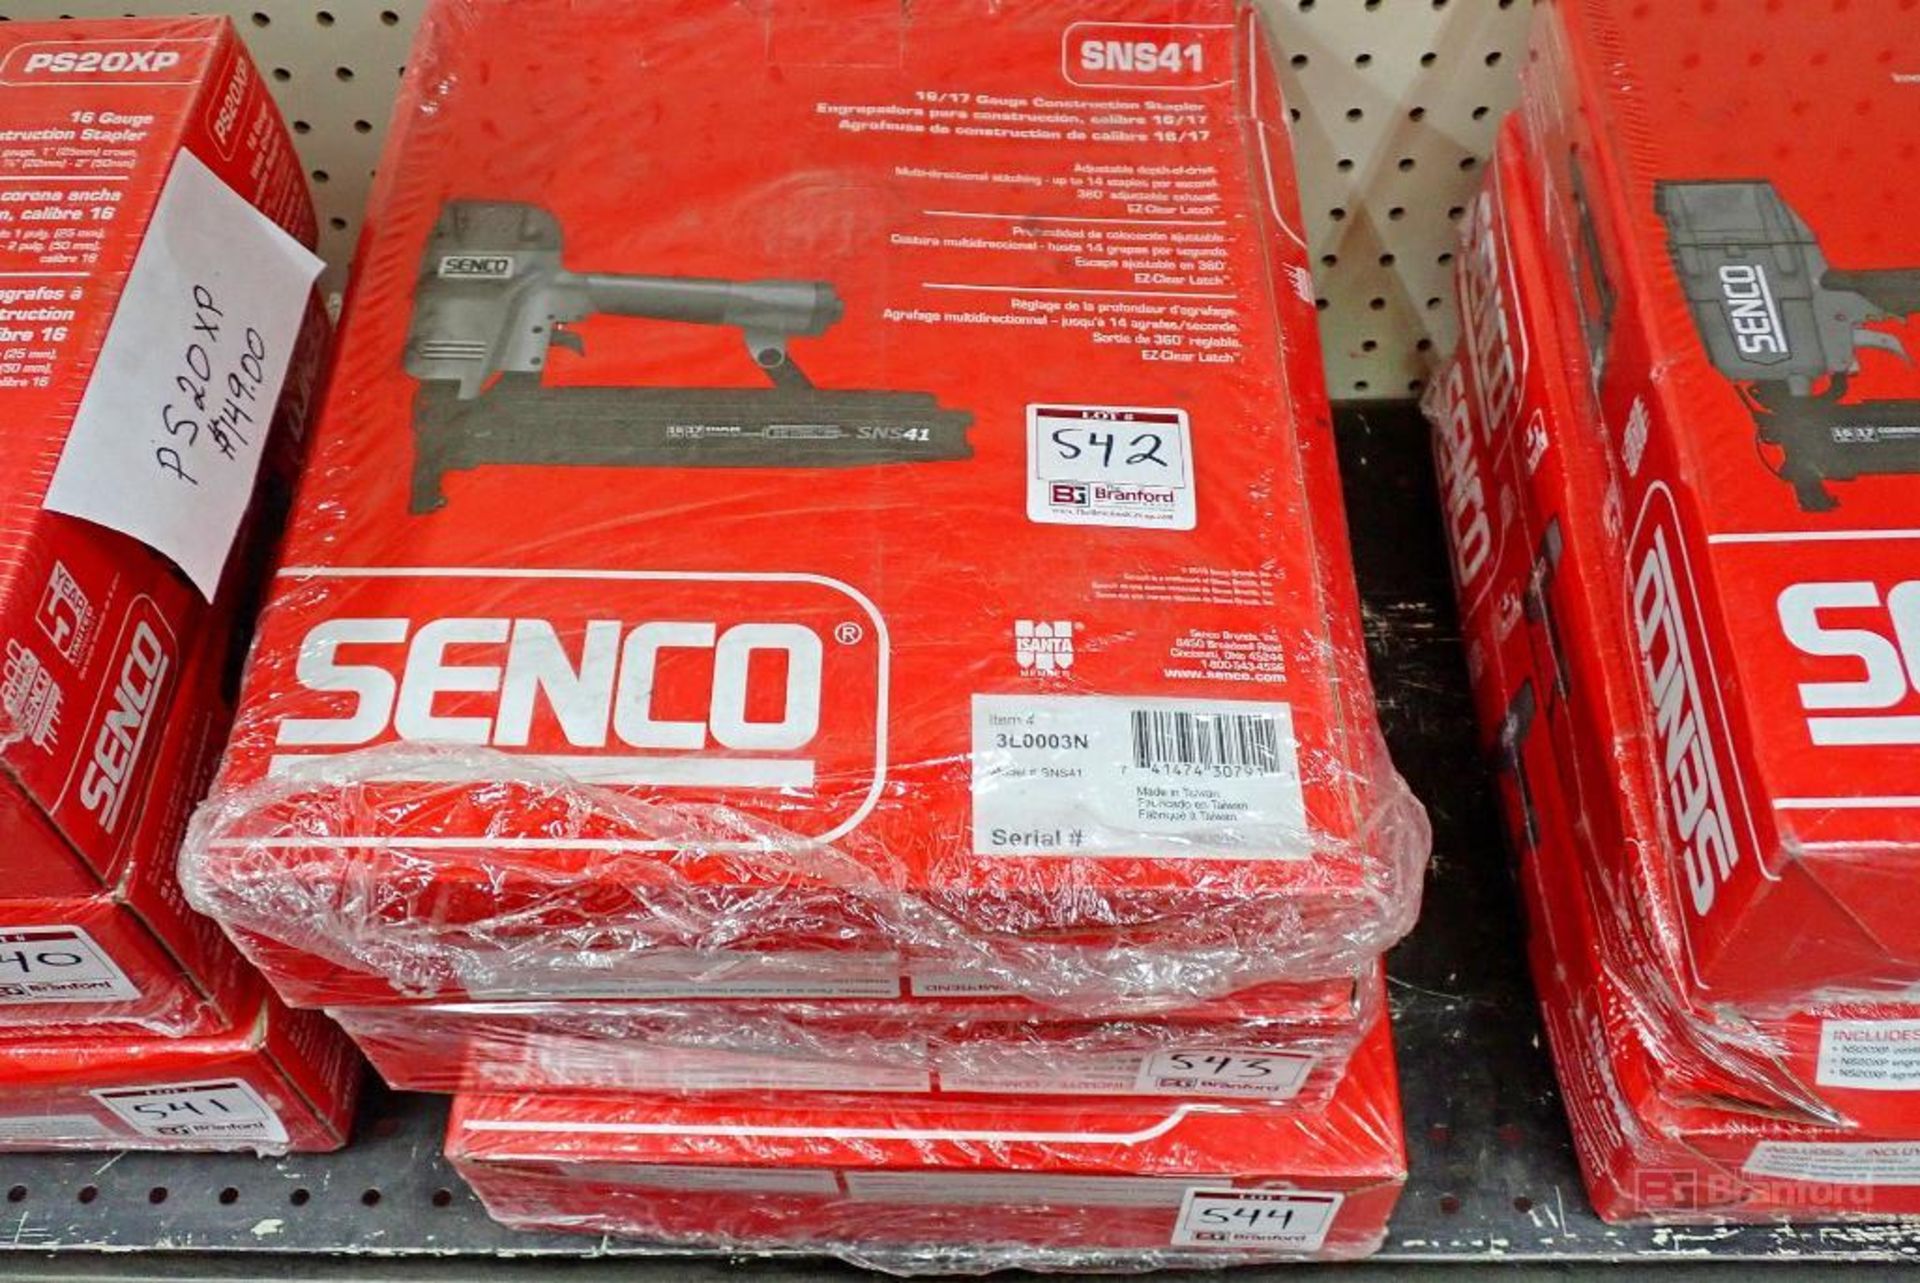 Senco SNS41 16/17 Gauge Construction Stapler